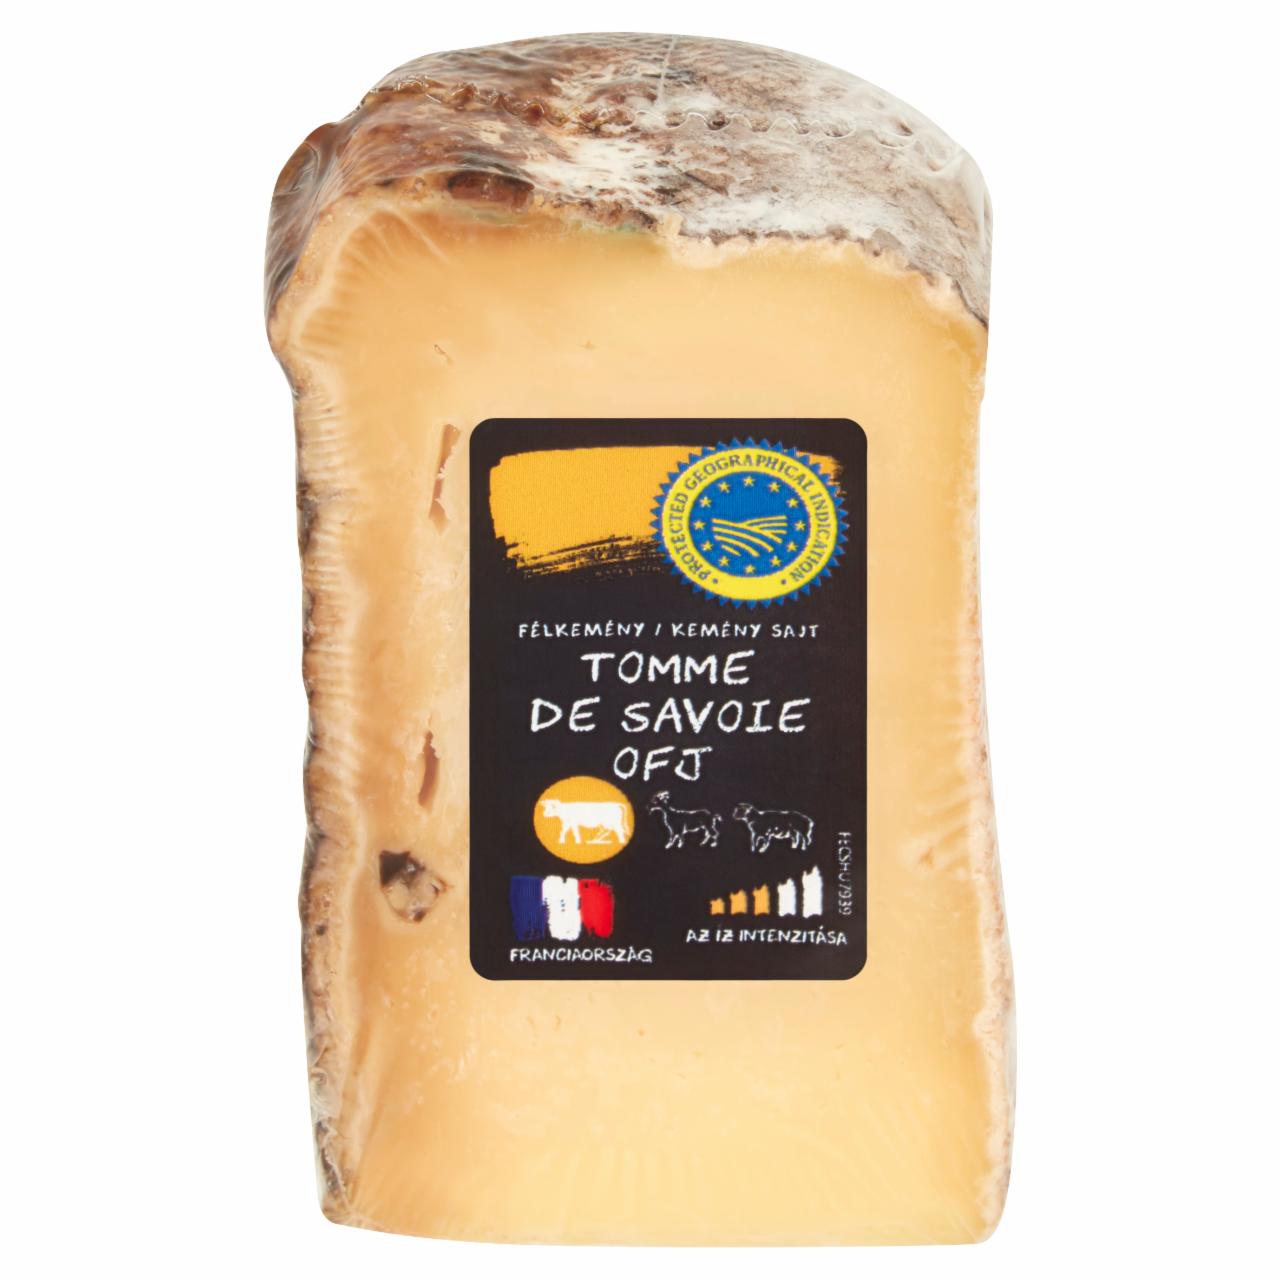 Képek - Tomme de Savoire félkemény sajt